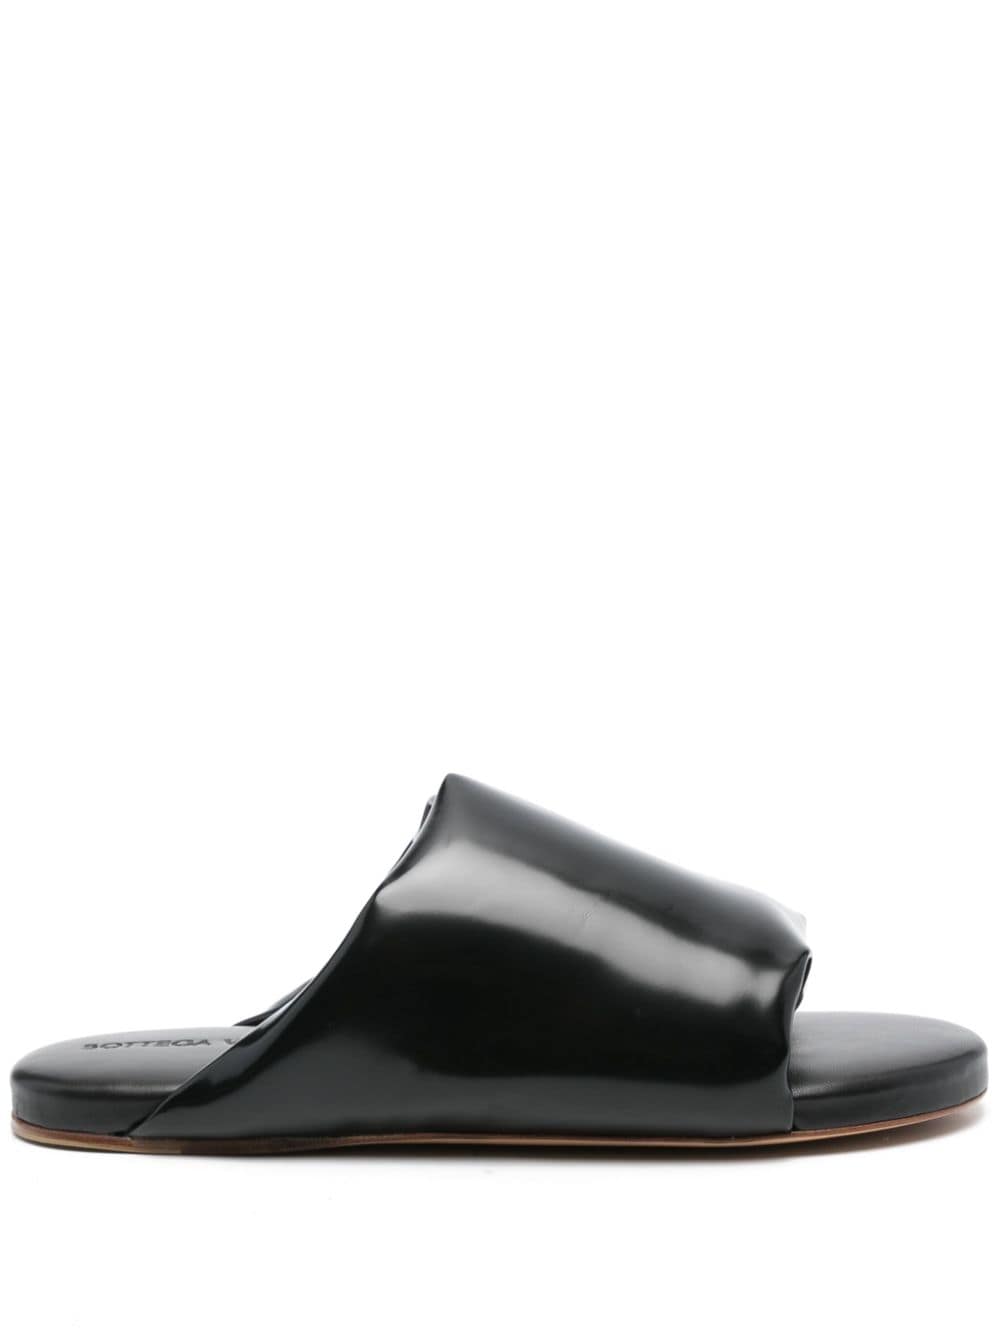 Bottega Veneta Padded Leather Flat Sandals In Black